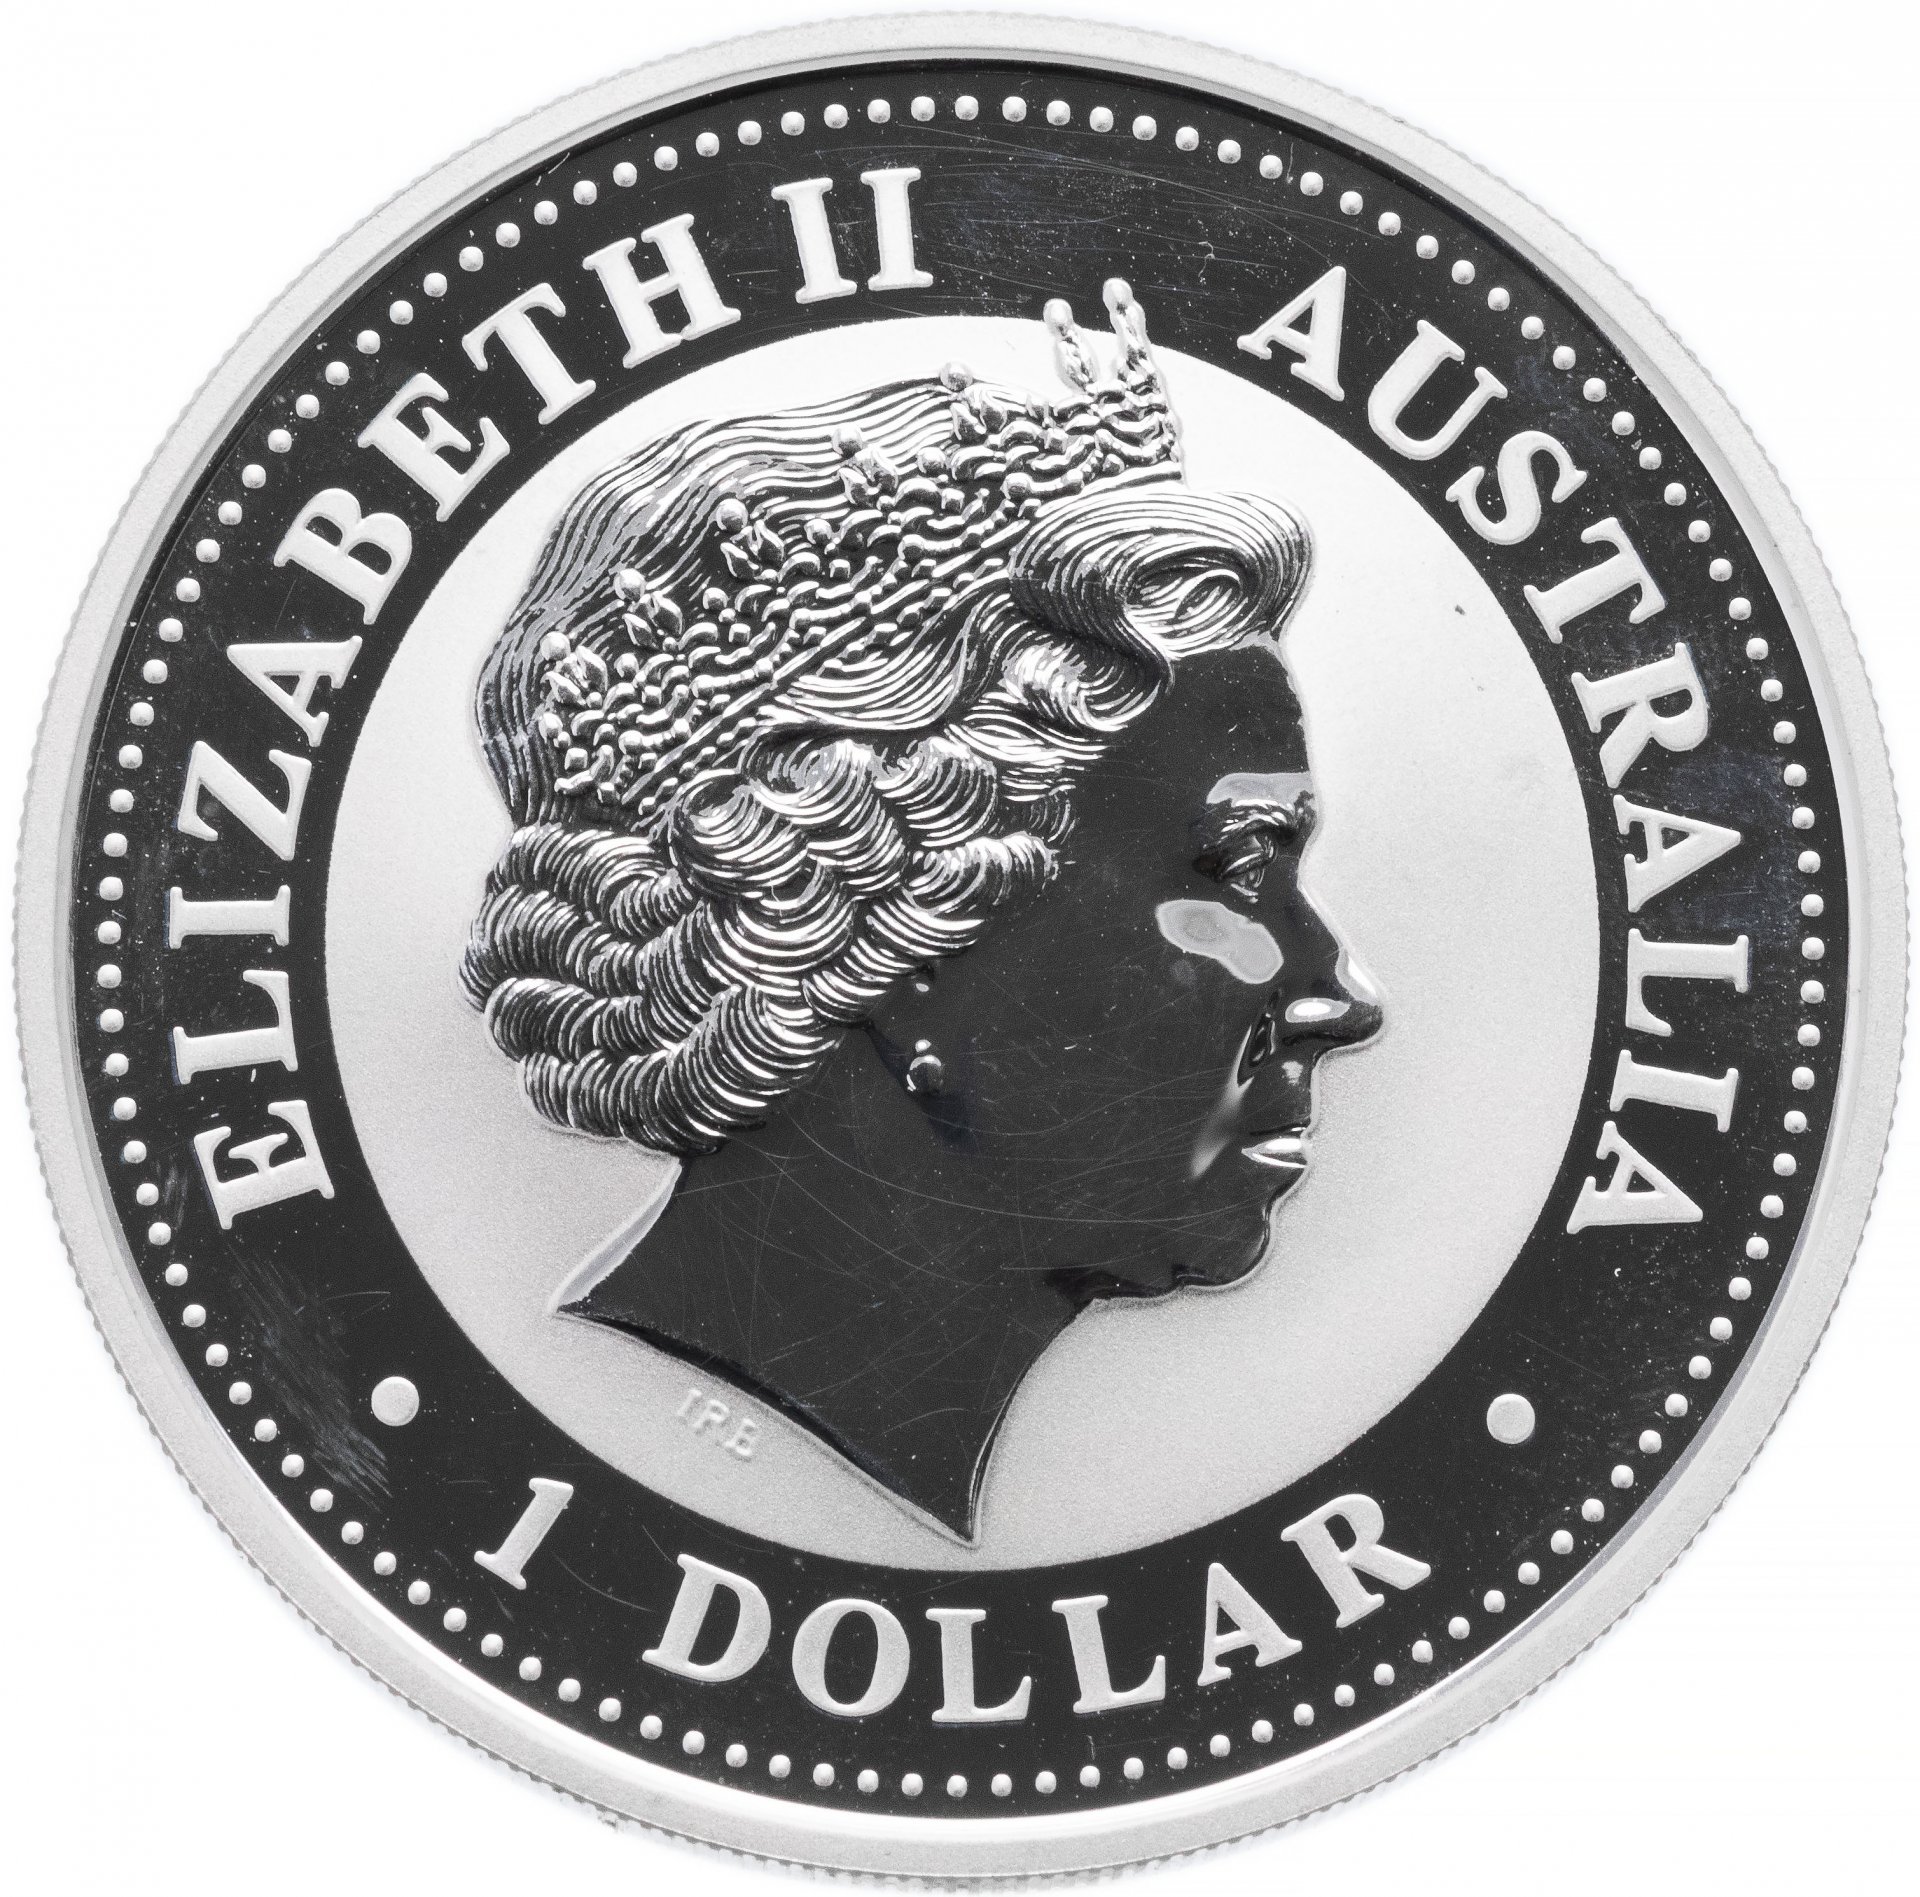 1 Доллар Австралия. Аверс австралийской монеты. Металический долар 2004 год. 1 Доллар 2005 год петух Австралия. 1 доллар 2006